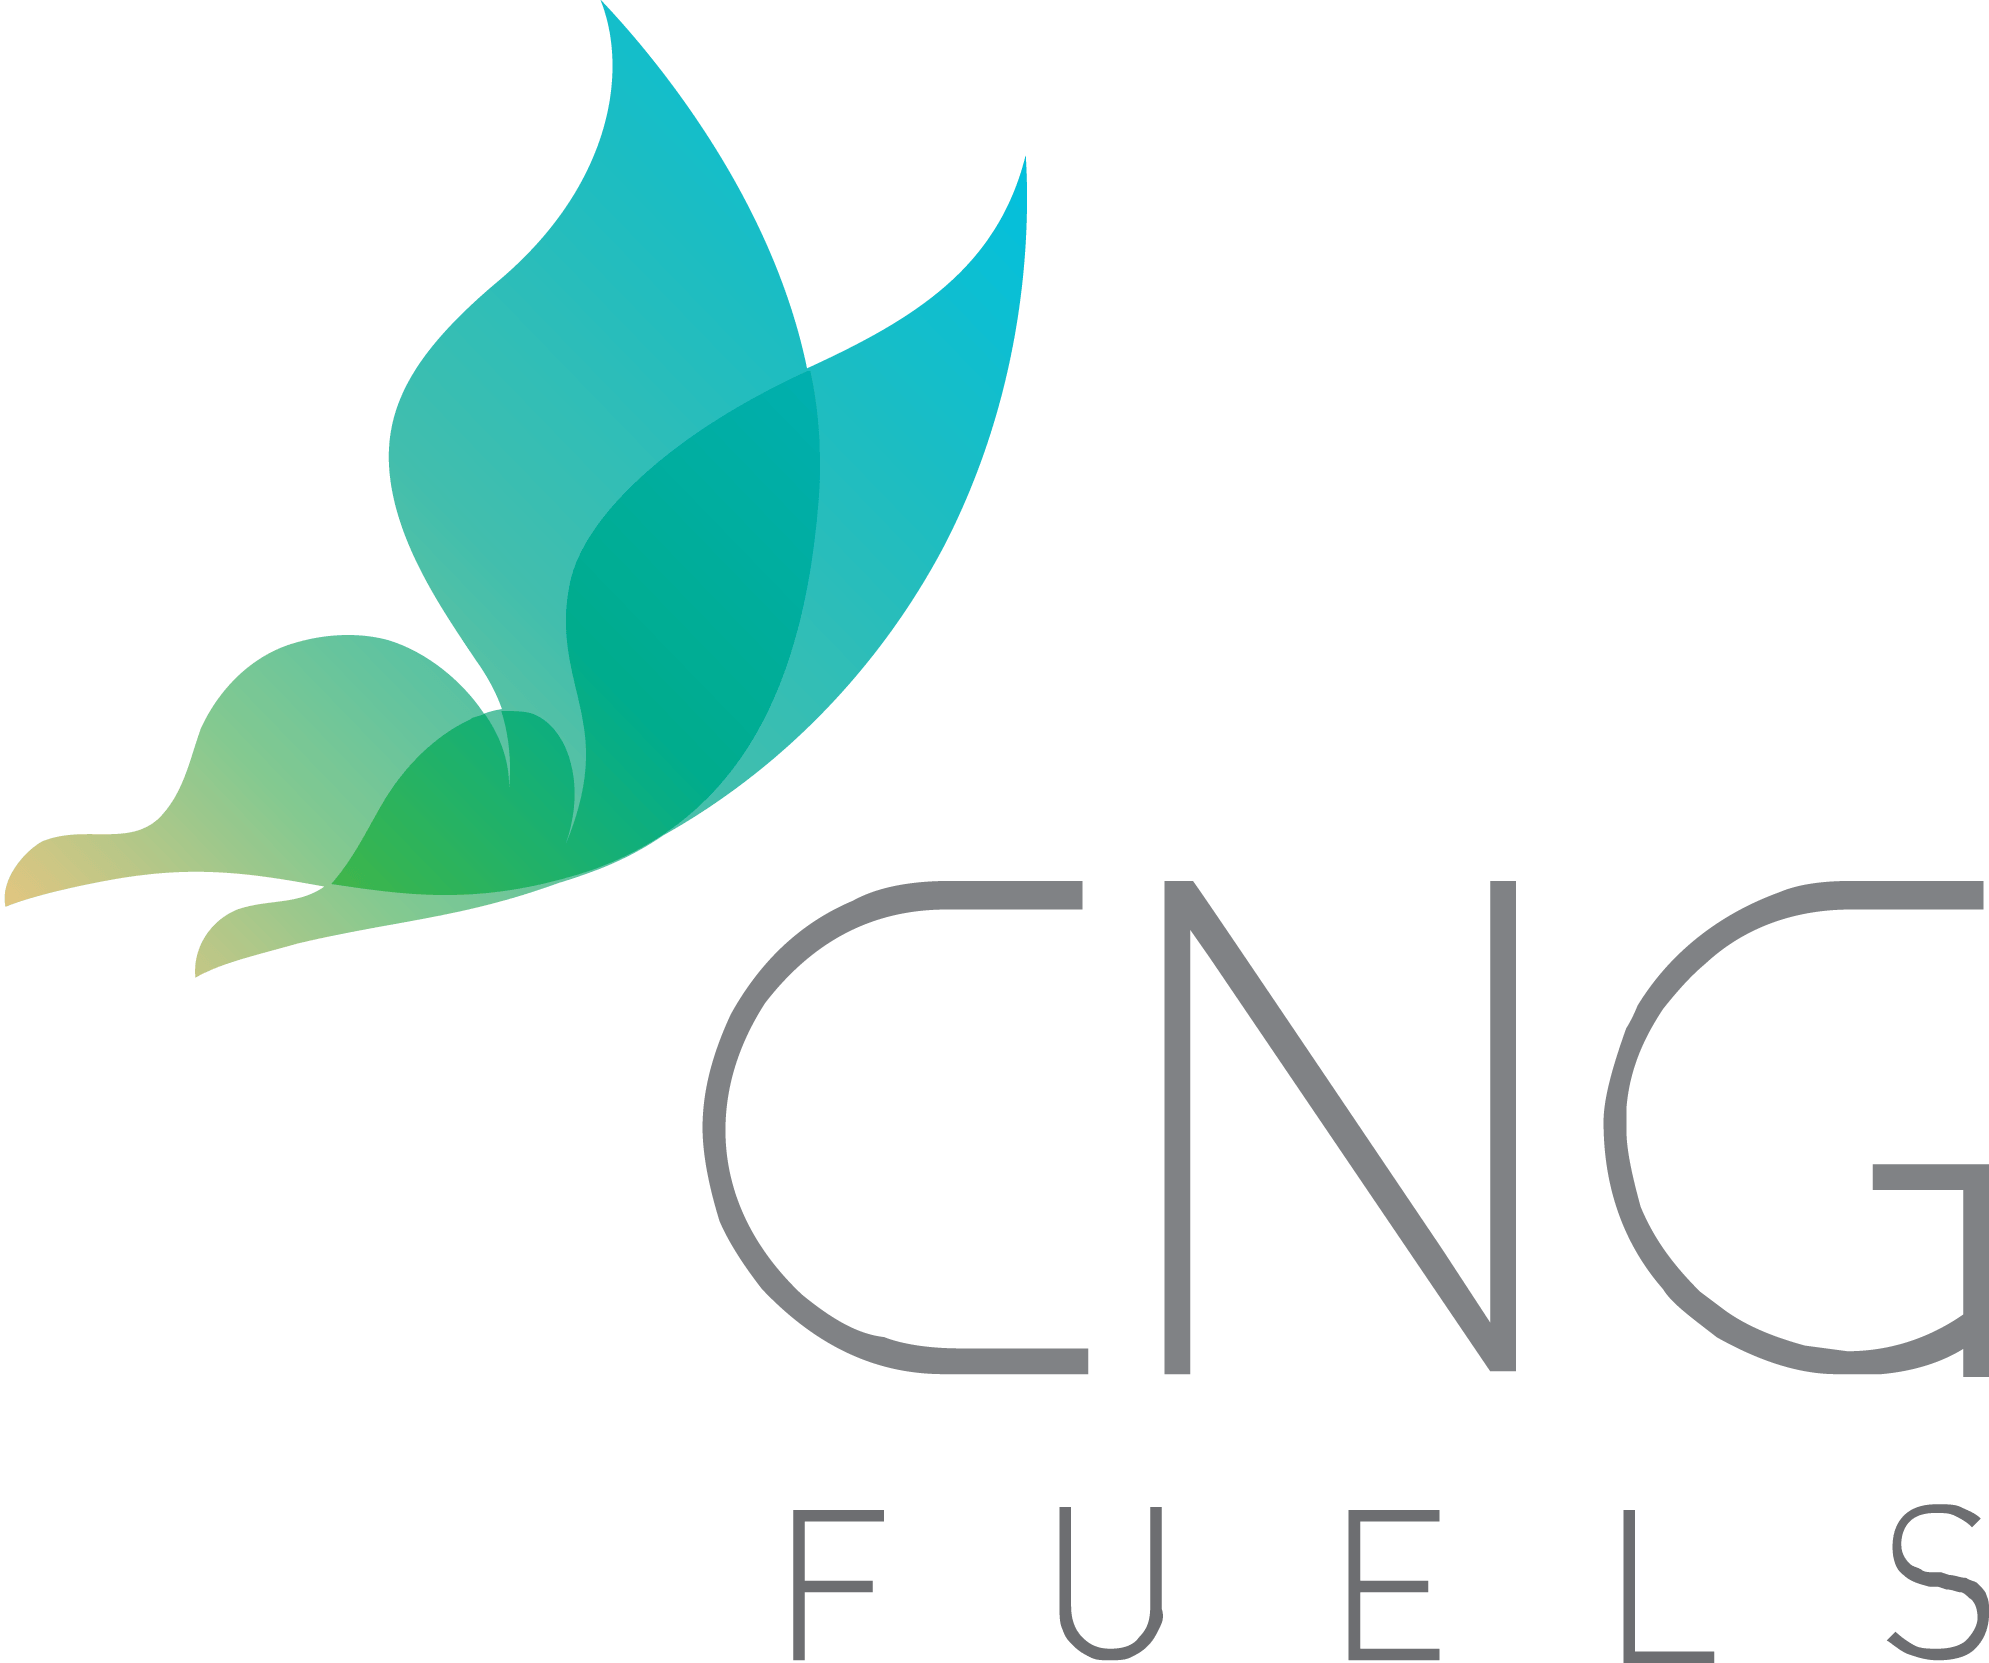 CNG Logo - Homepage